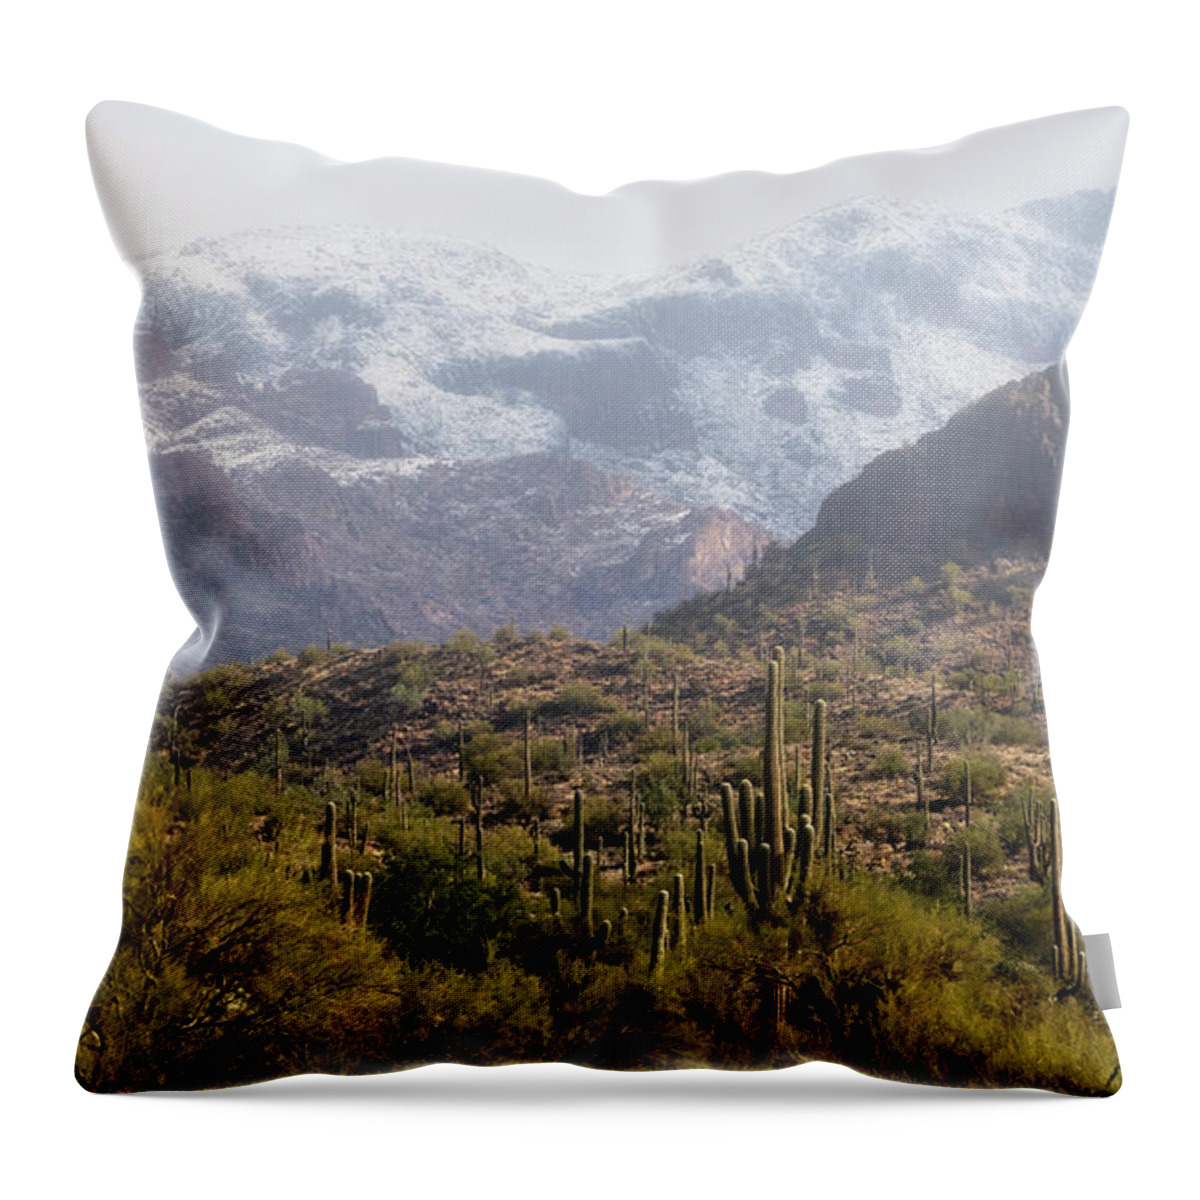 Arizona Throw Pillow featuring the photograph Saguaro Amongst The Hills Of Snow by Saija Lehtonen